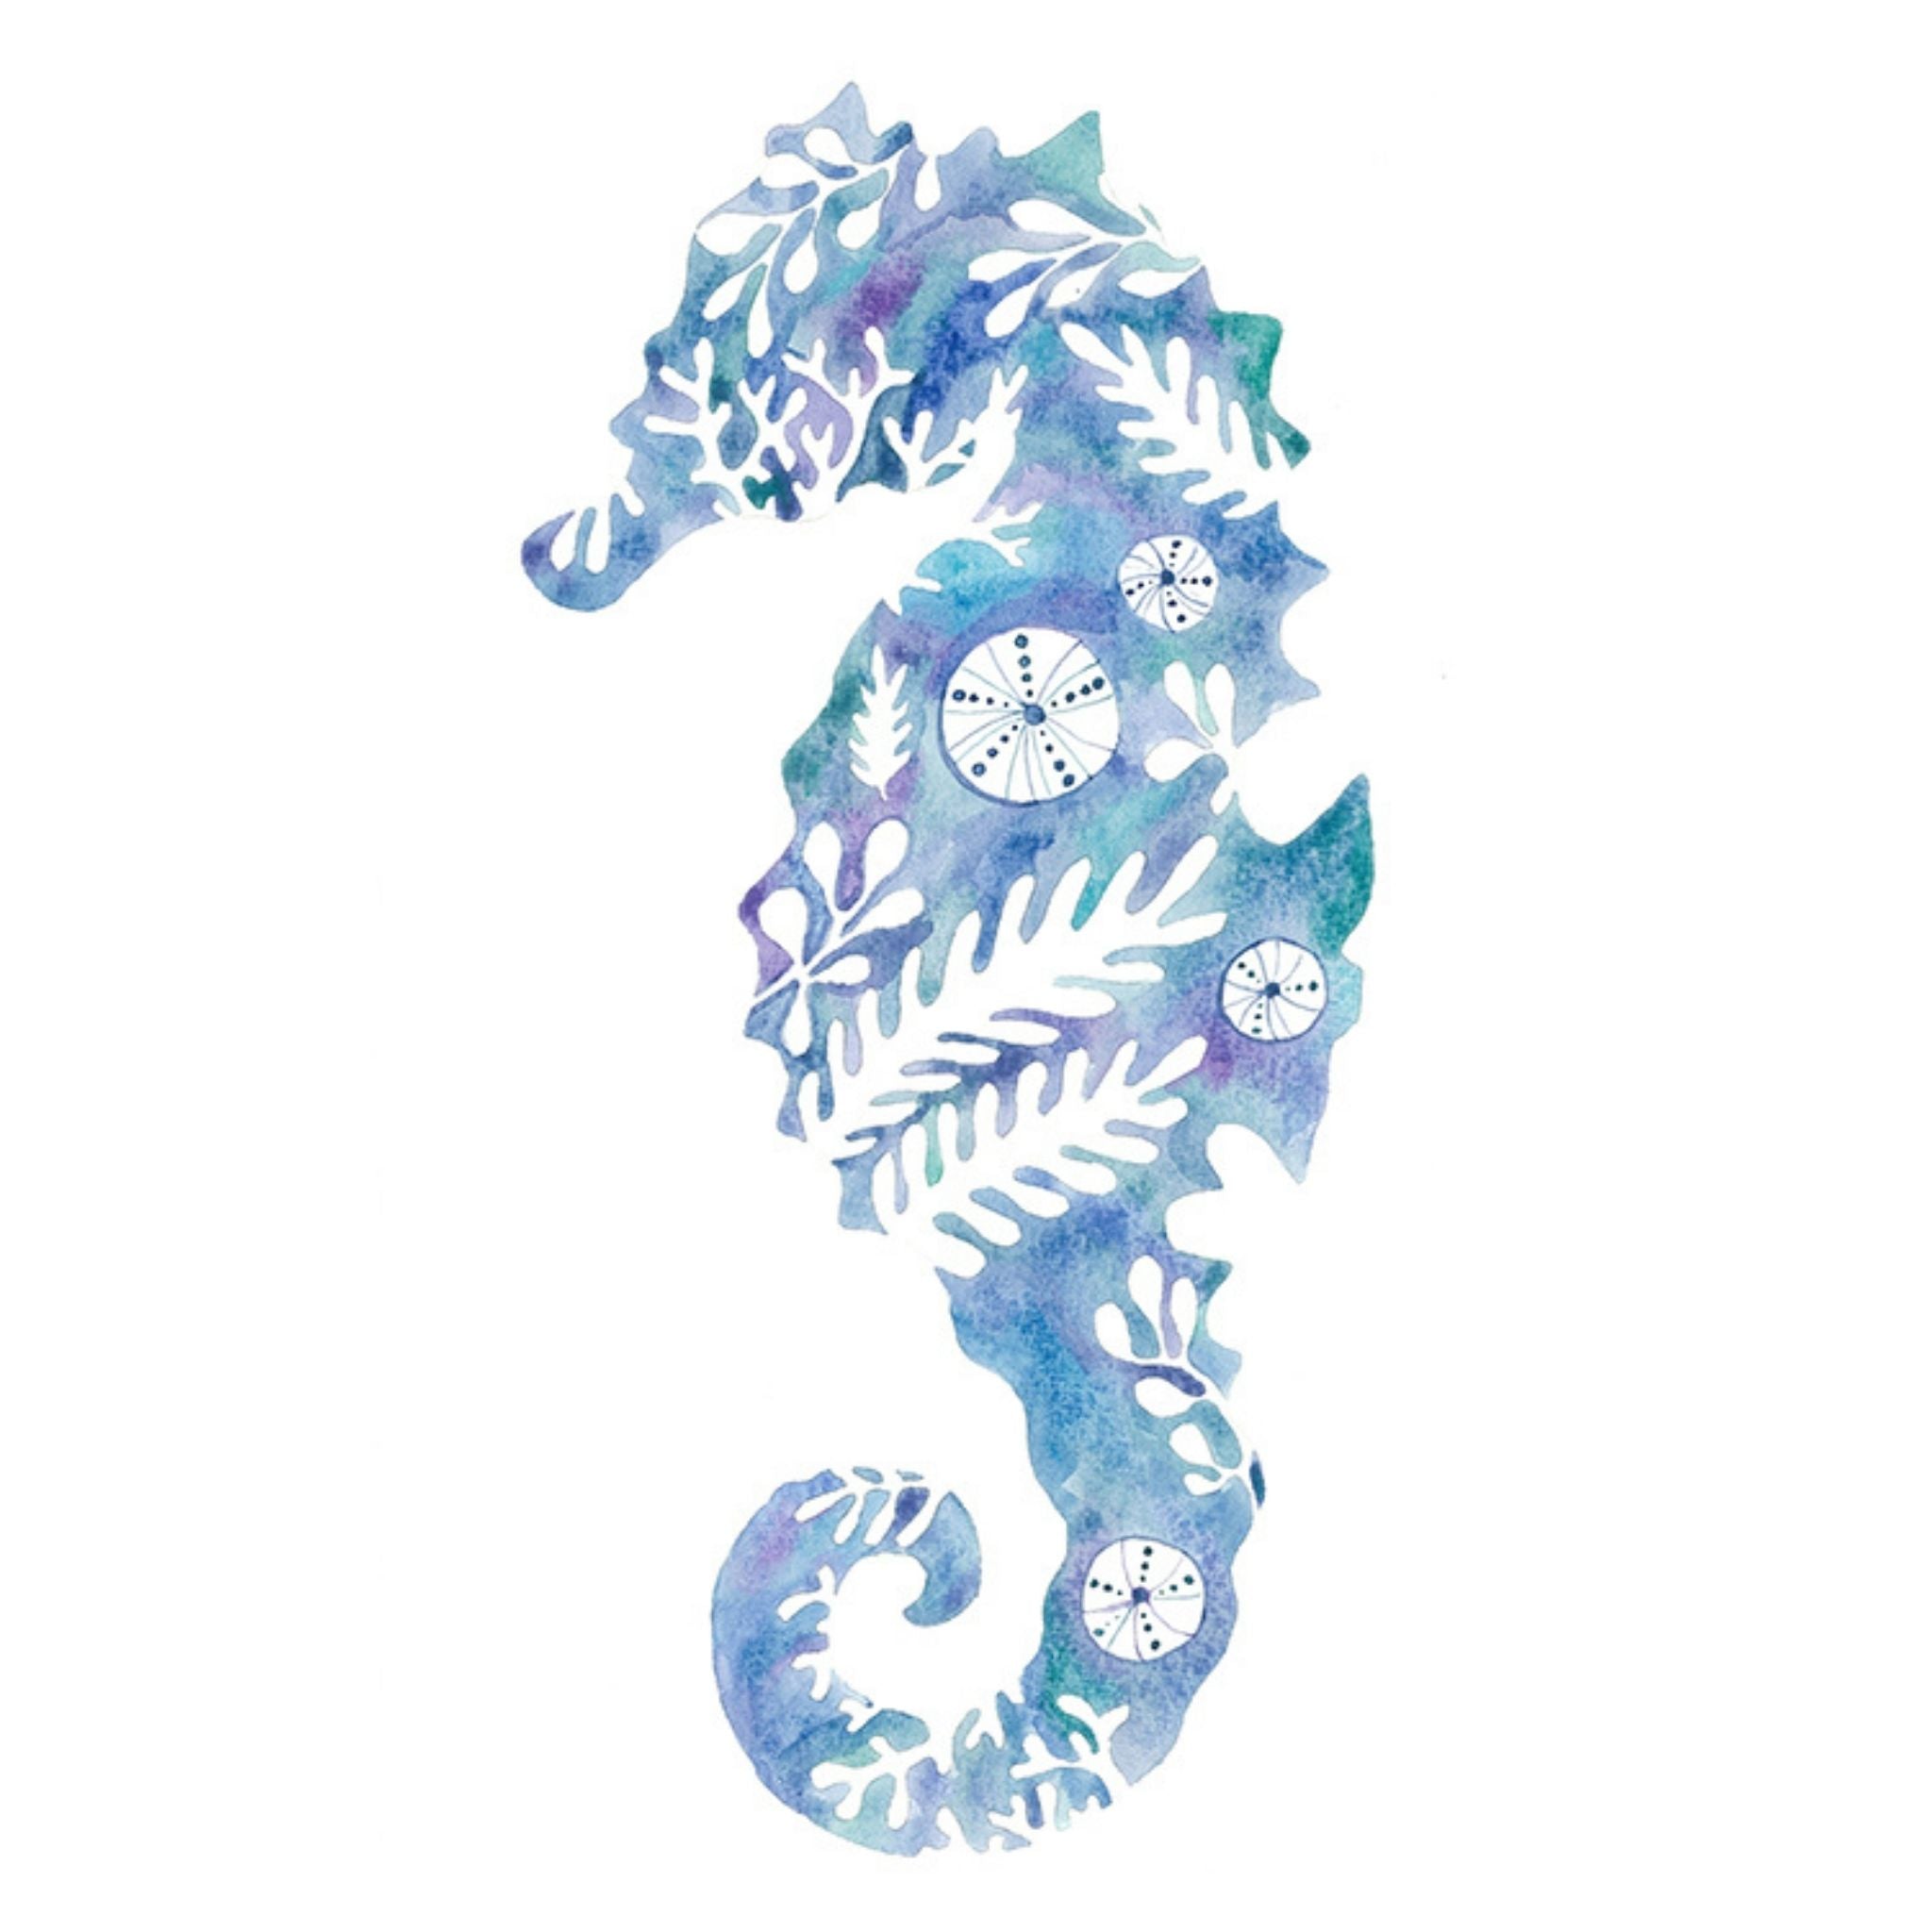 Aqua Seahorse (Size: A4)